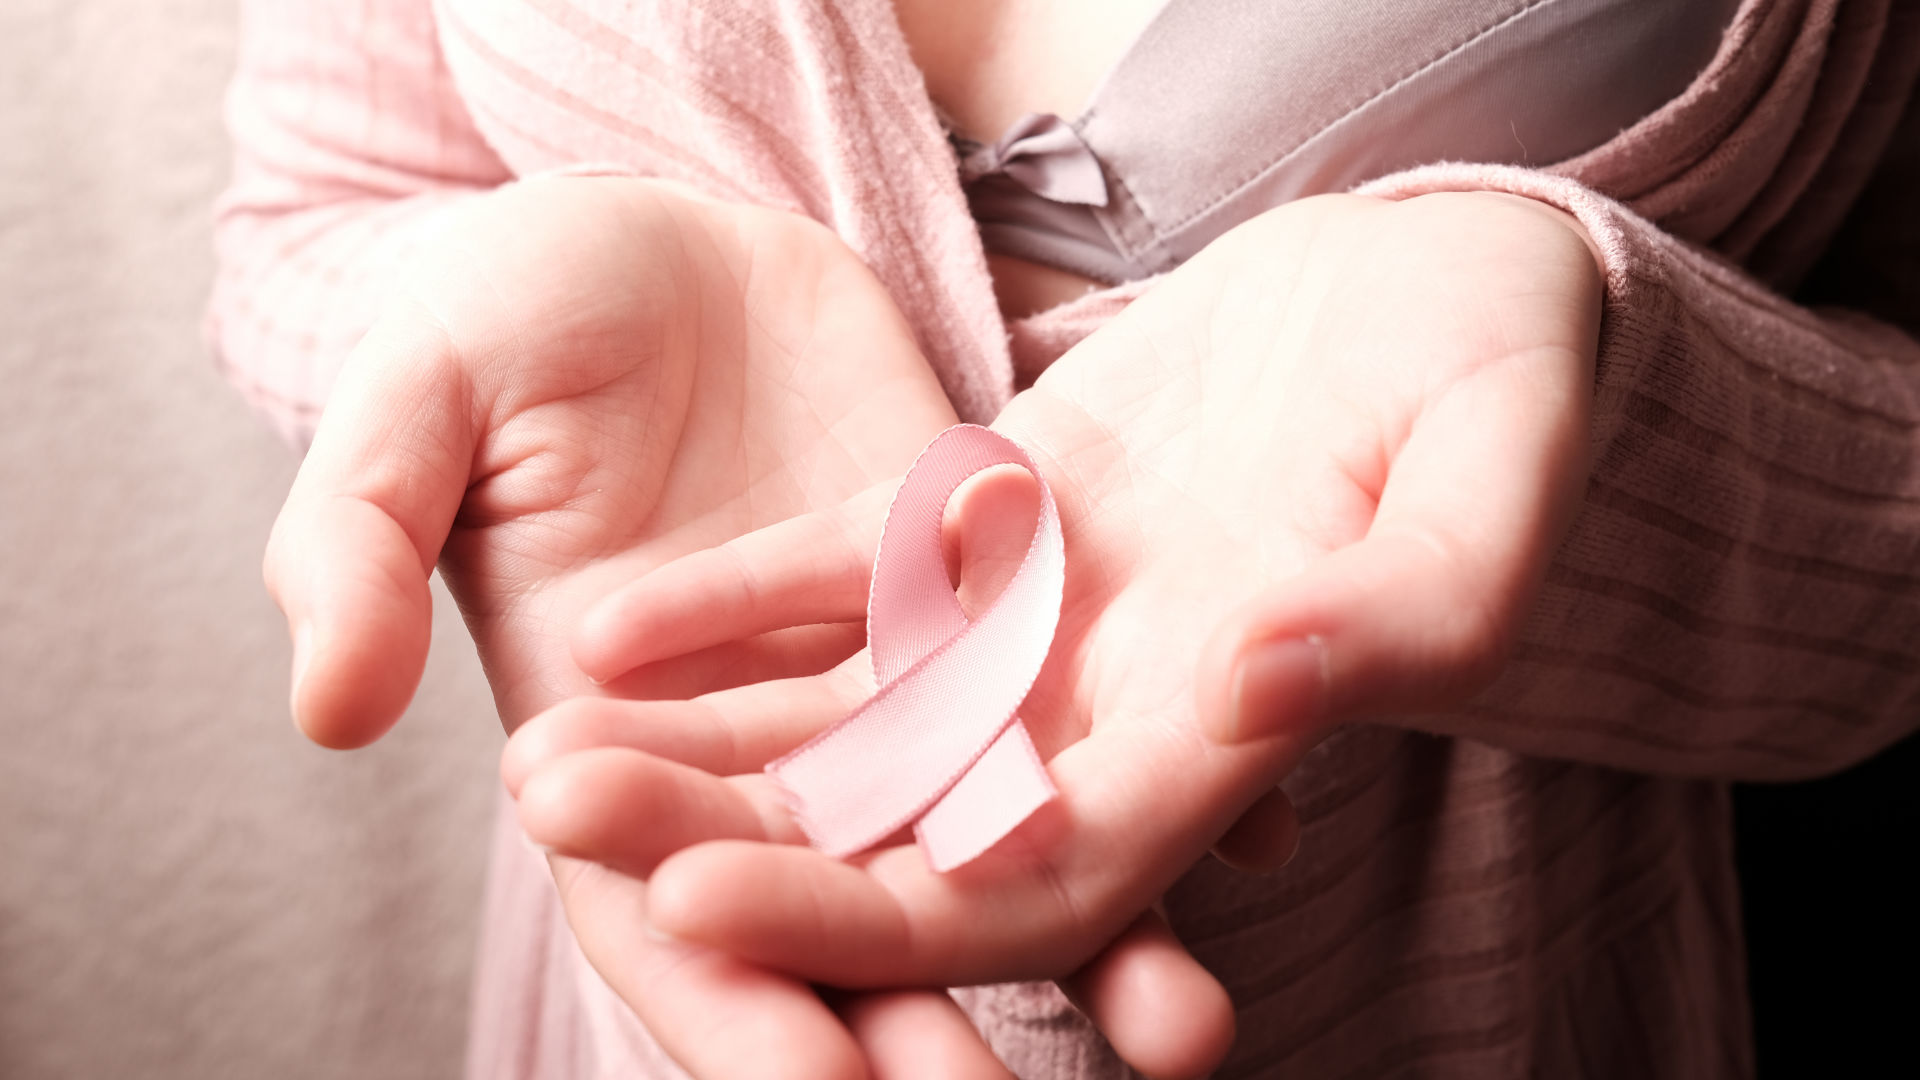 Bali Breast Cancer Awareness